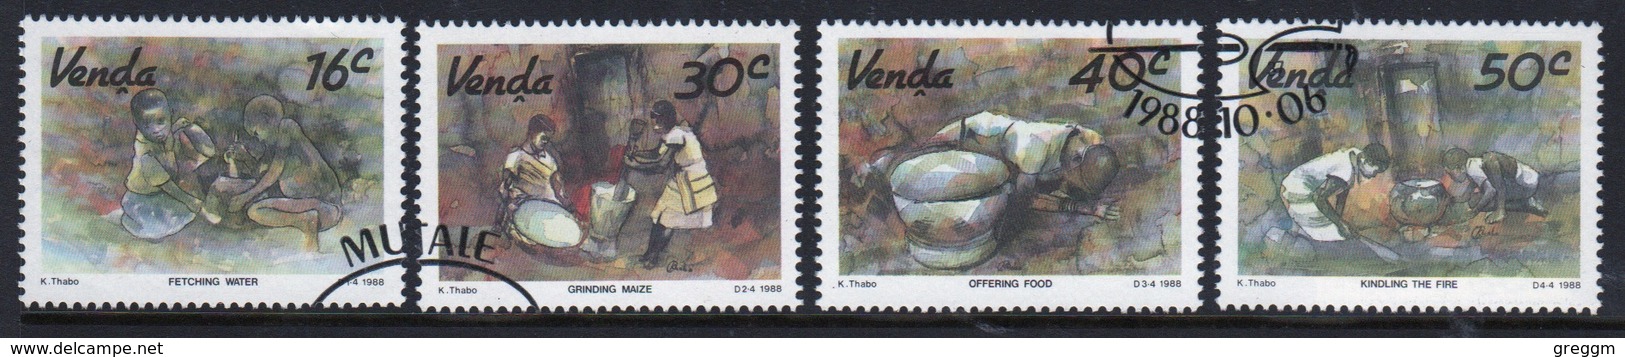 Venda 1988 Complete Set Of Stamps Celebrating Nurses Training College. - Venda